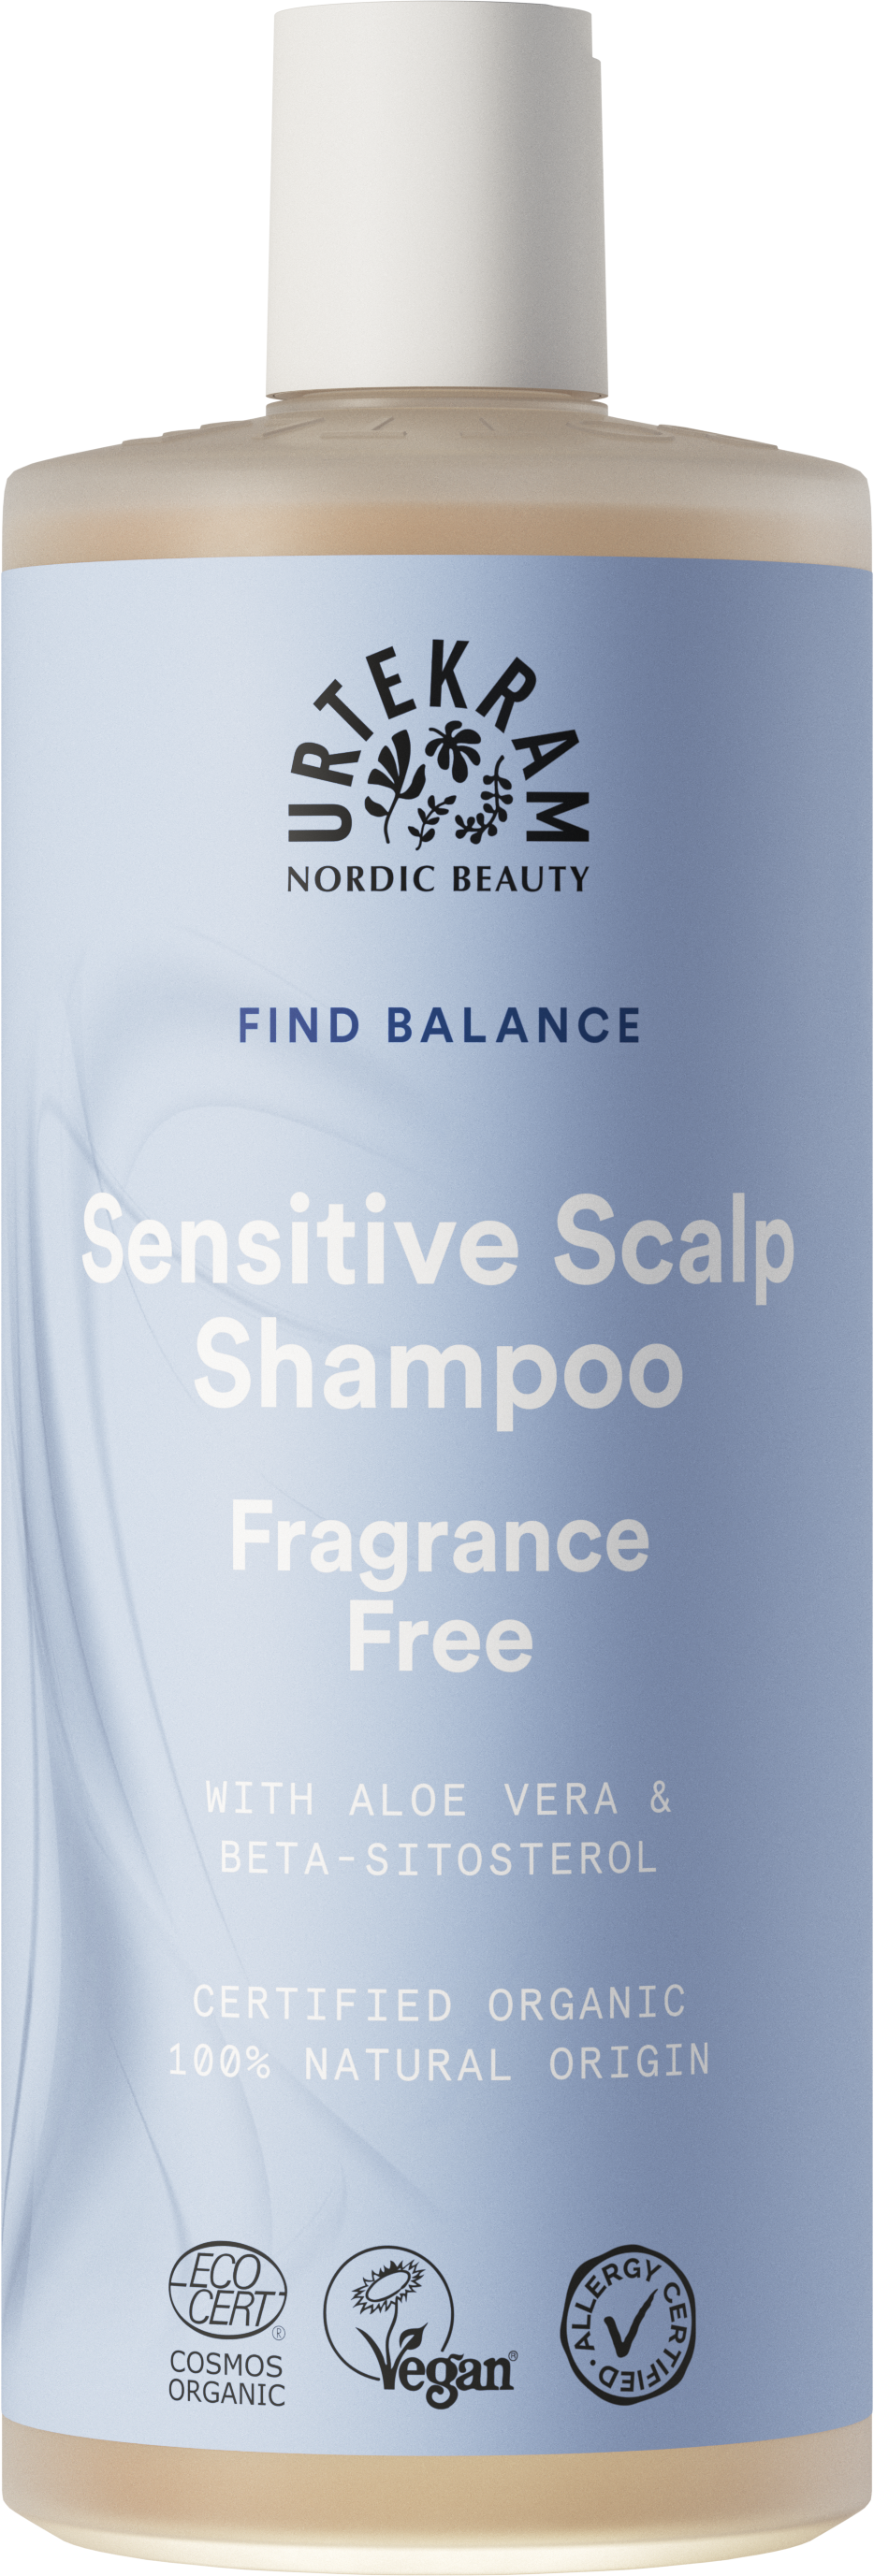 Fragrance Sensitive Scalp Shampoo